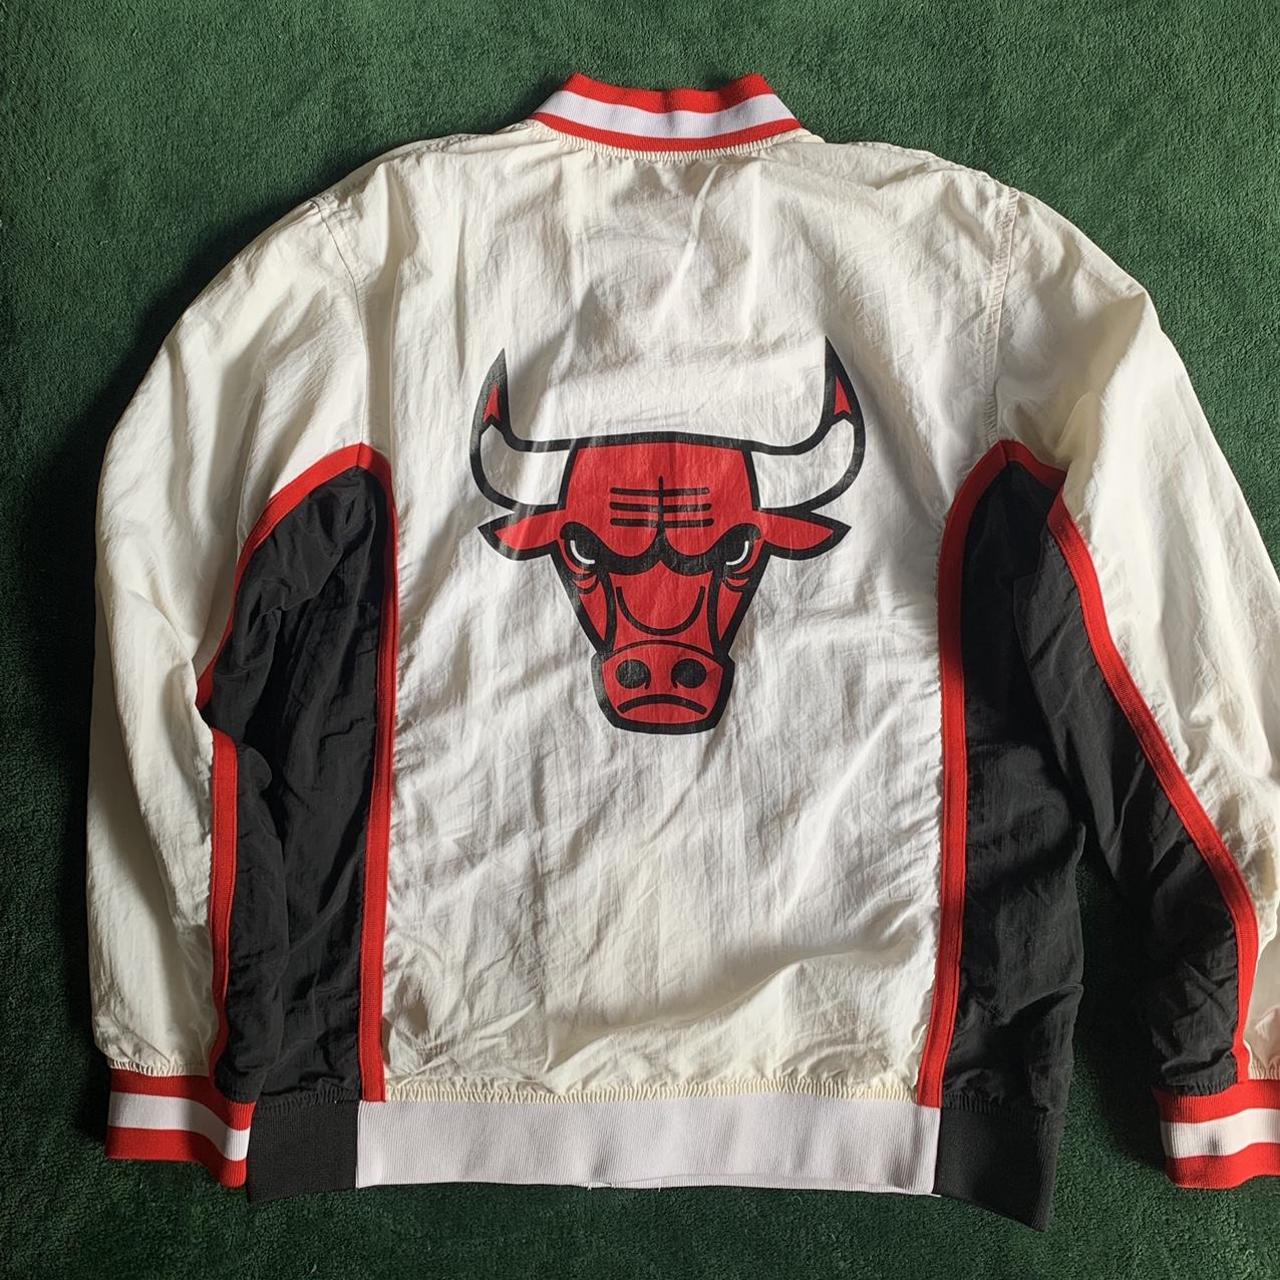 Mitchell & Ness Throwback Chicago Bulls Warm up Jacket 